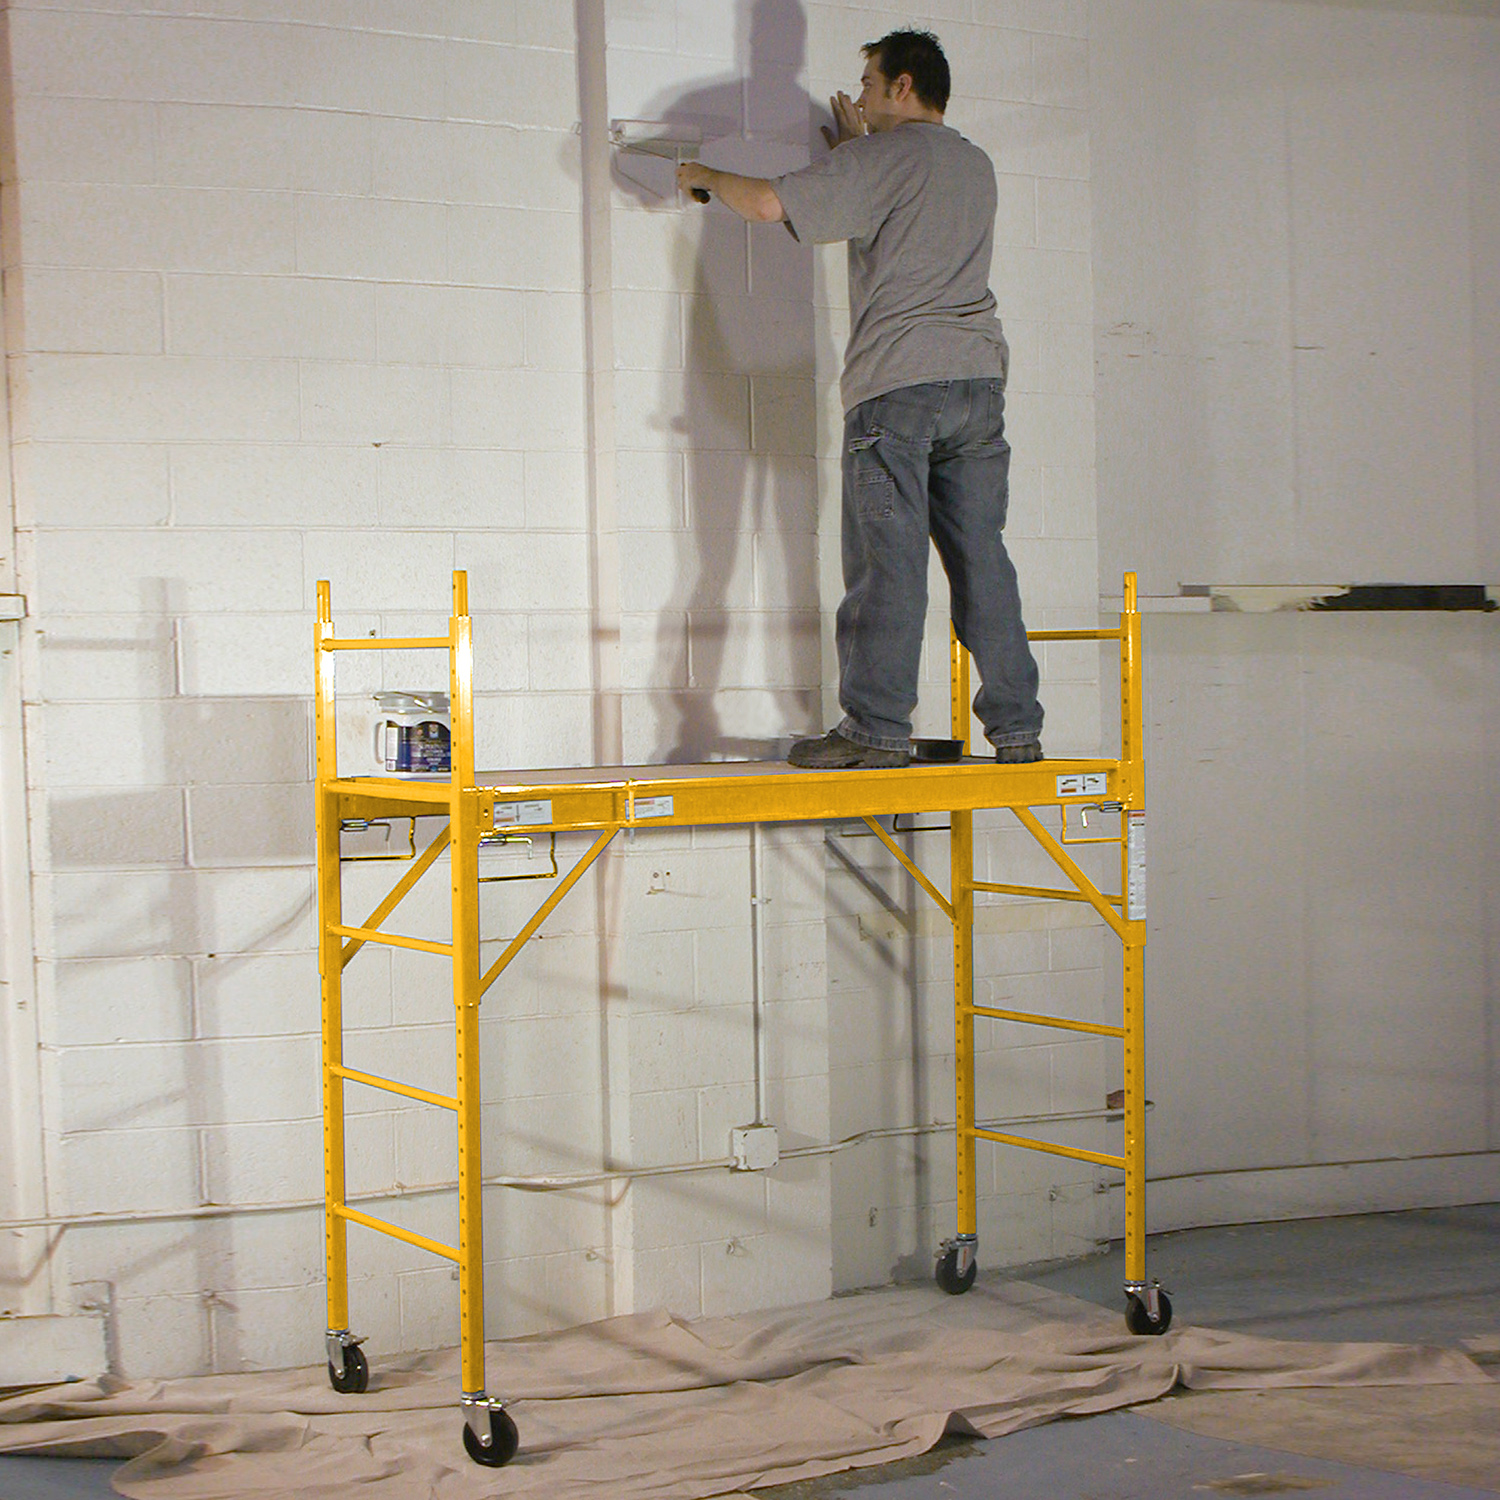 GSSI warehouse wall scaffolding work